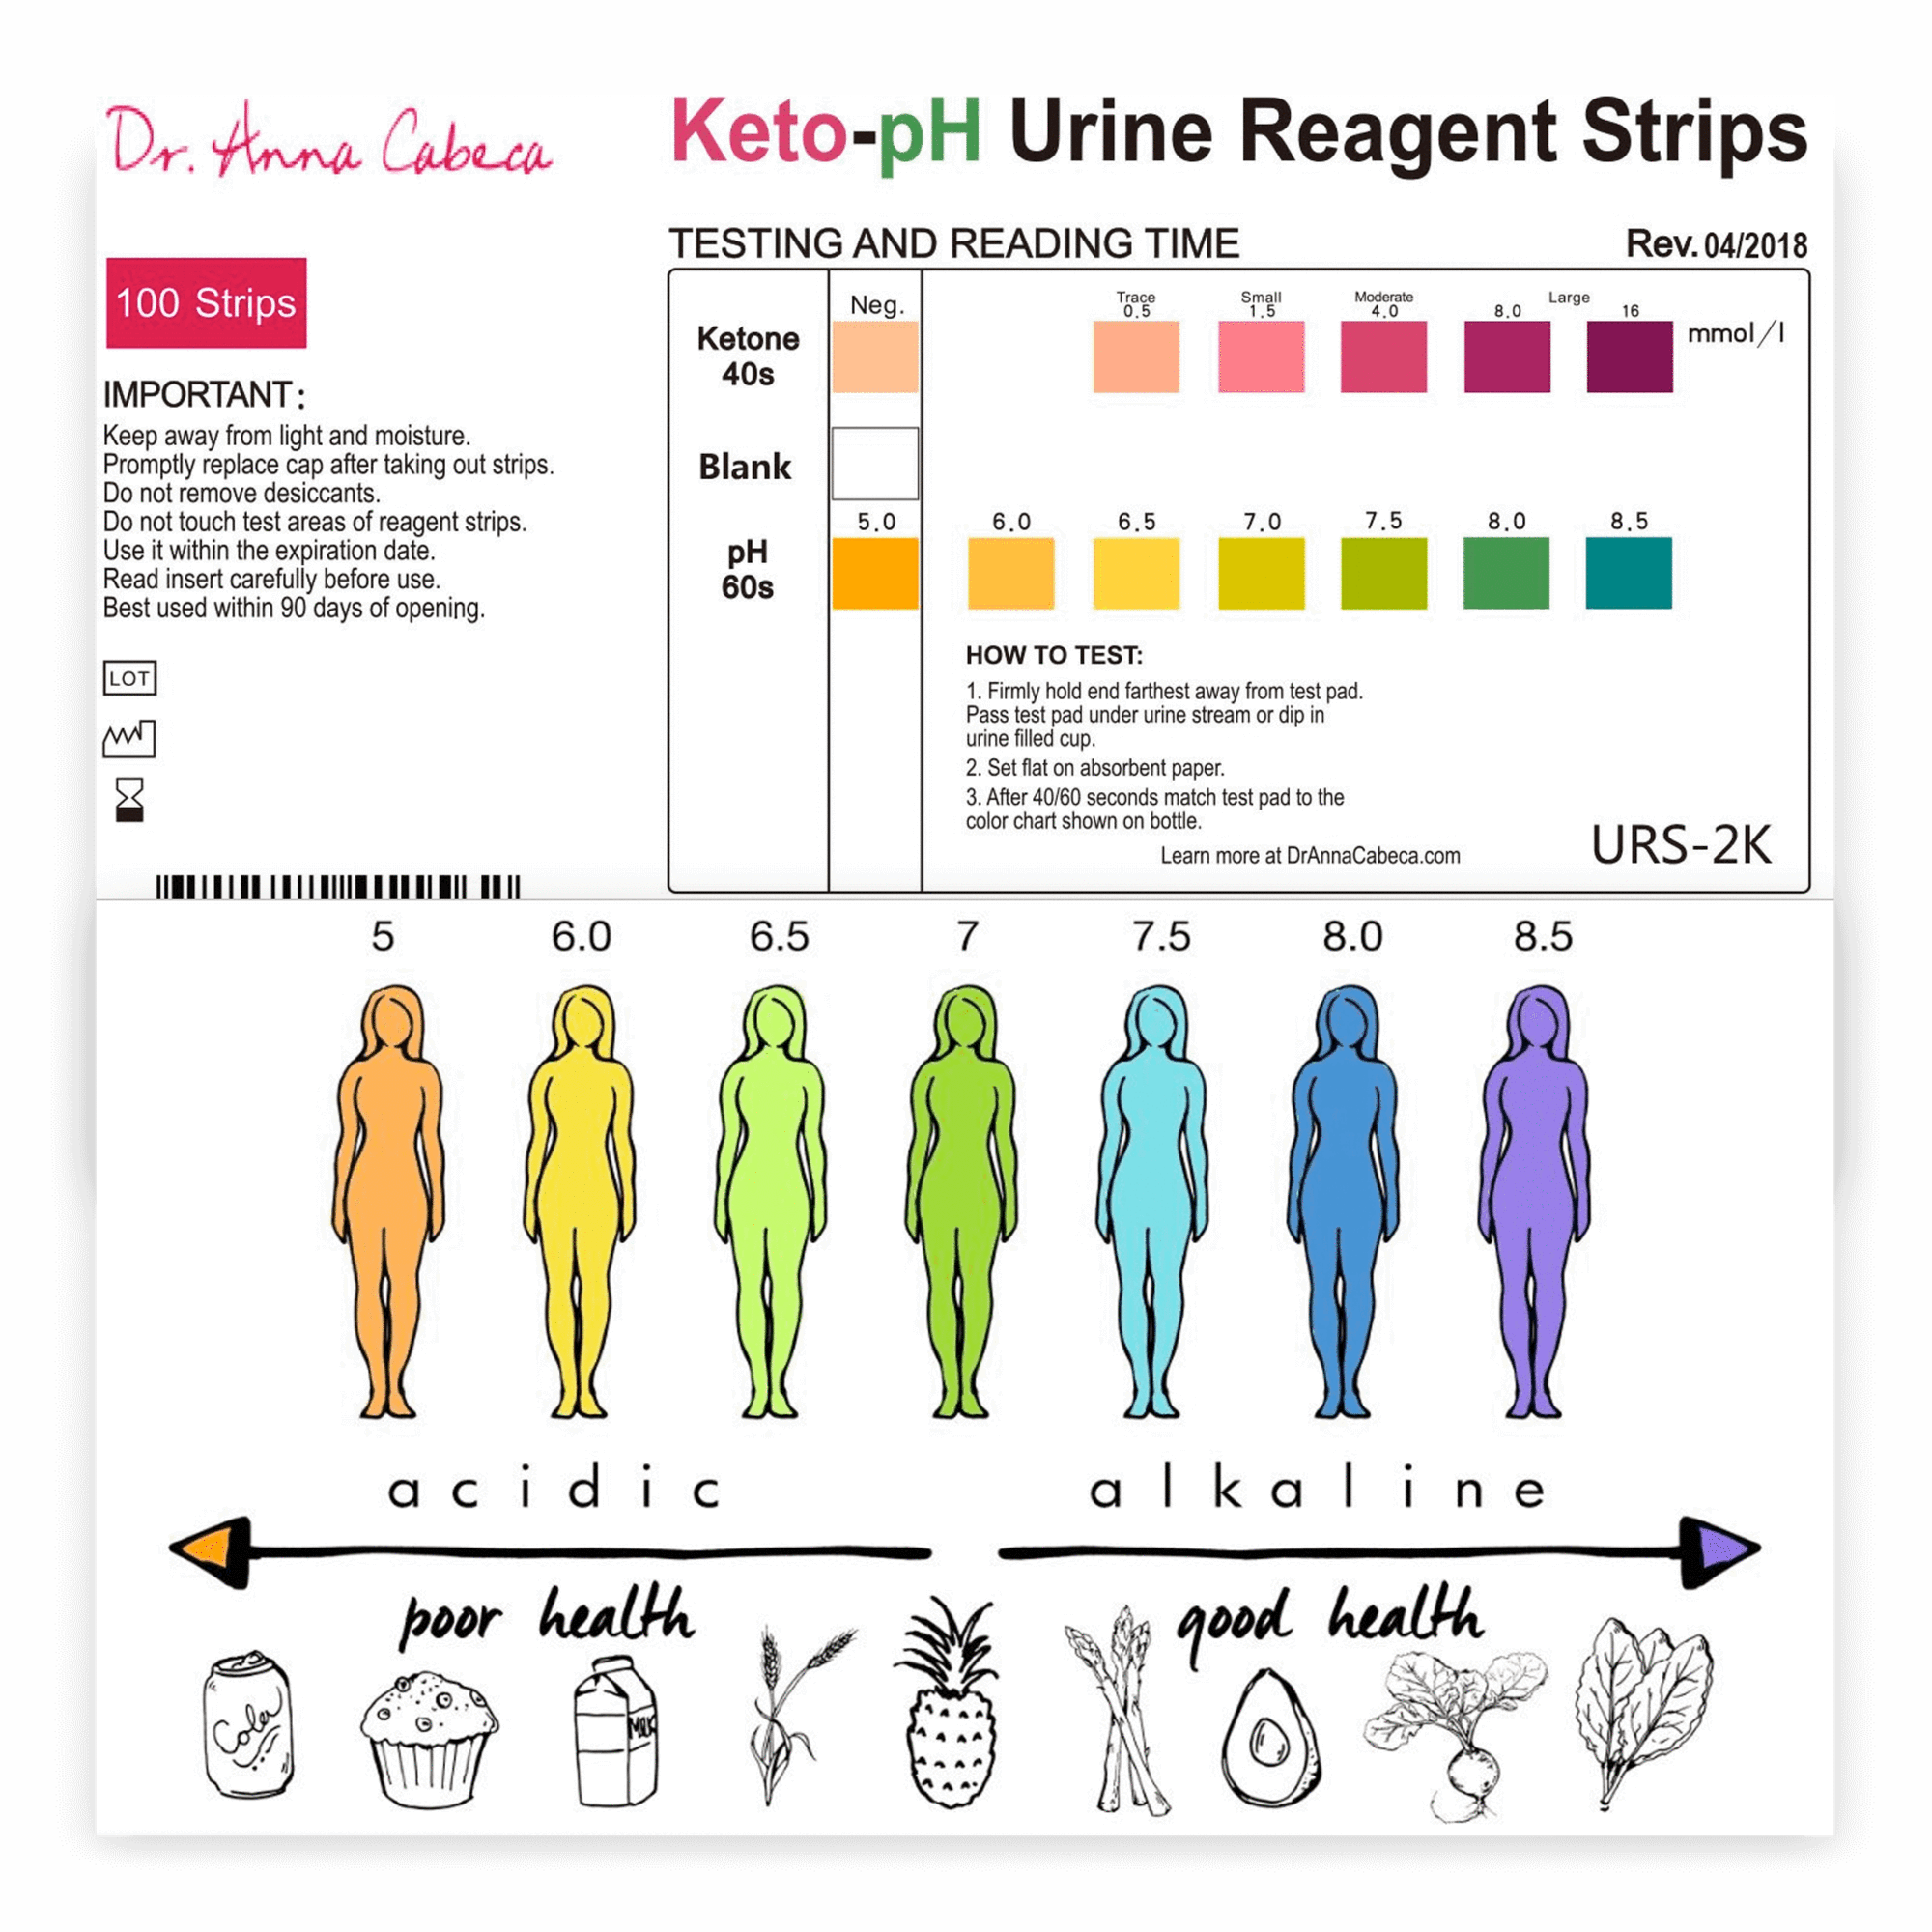 Sienna recomended testing Ketone strip